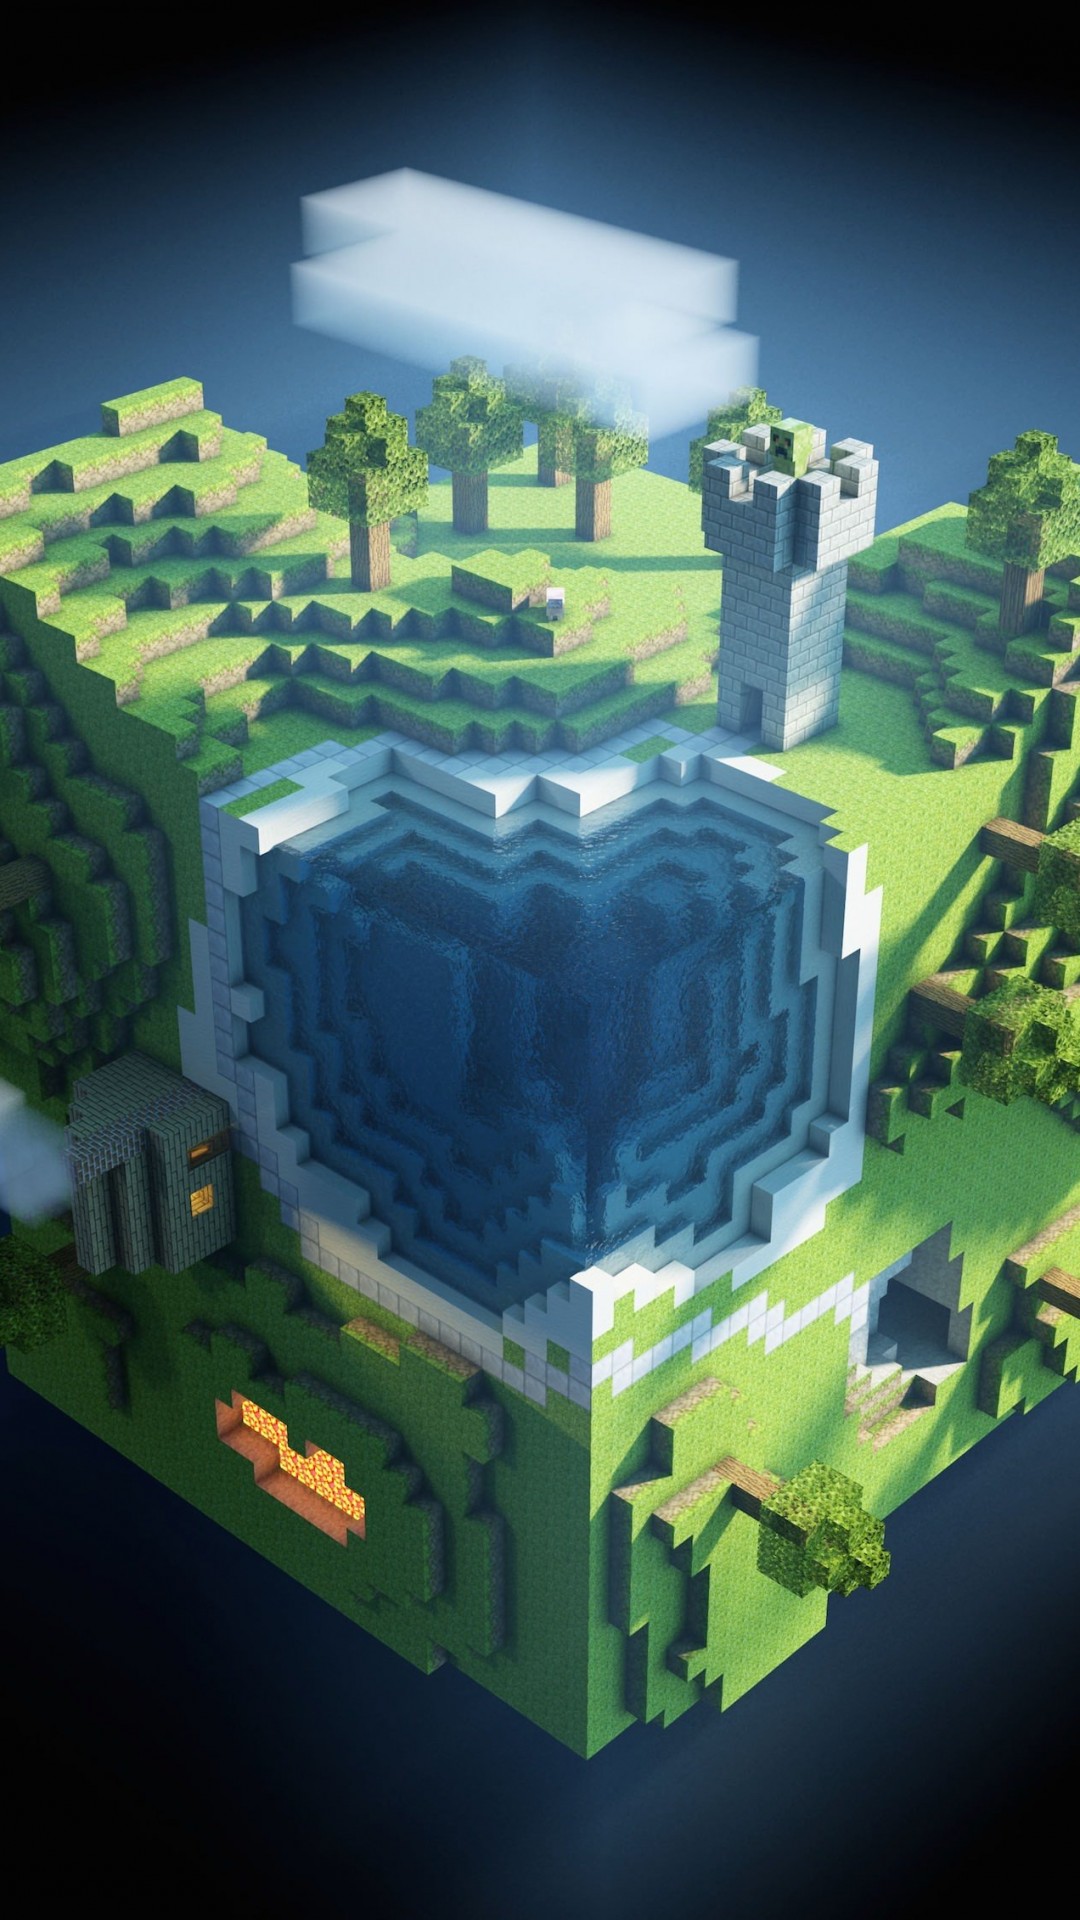 Planet Minecraft Wallpaper for LG G2